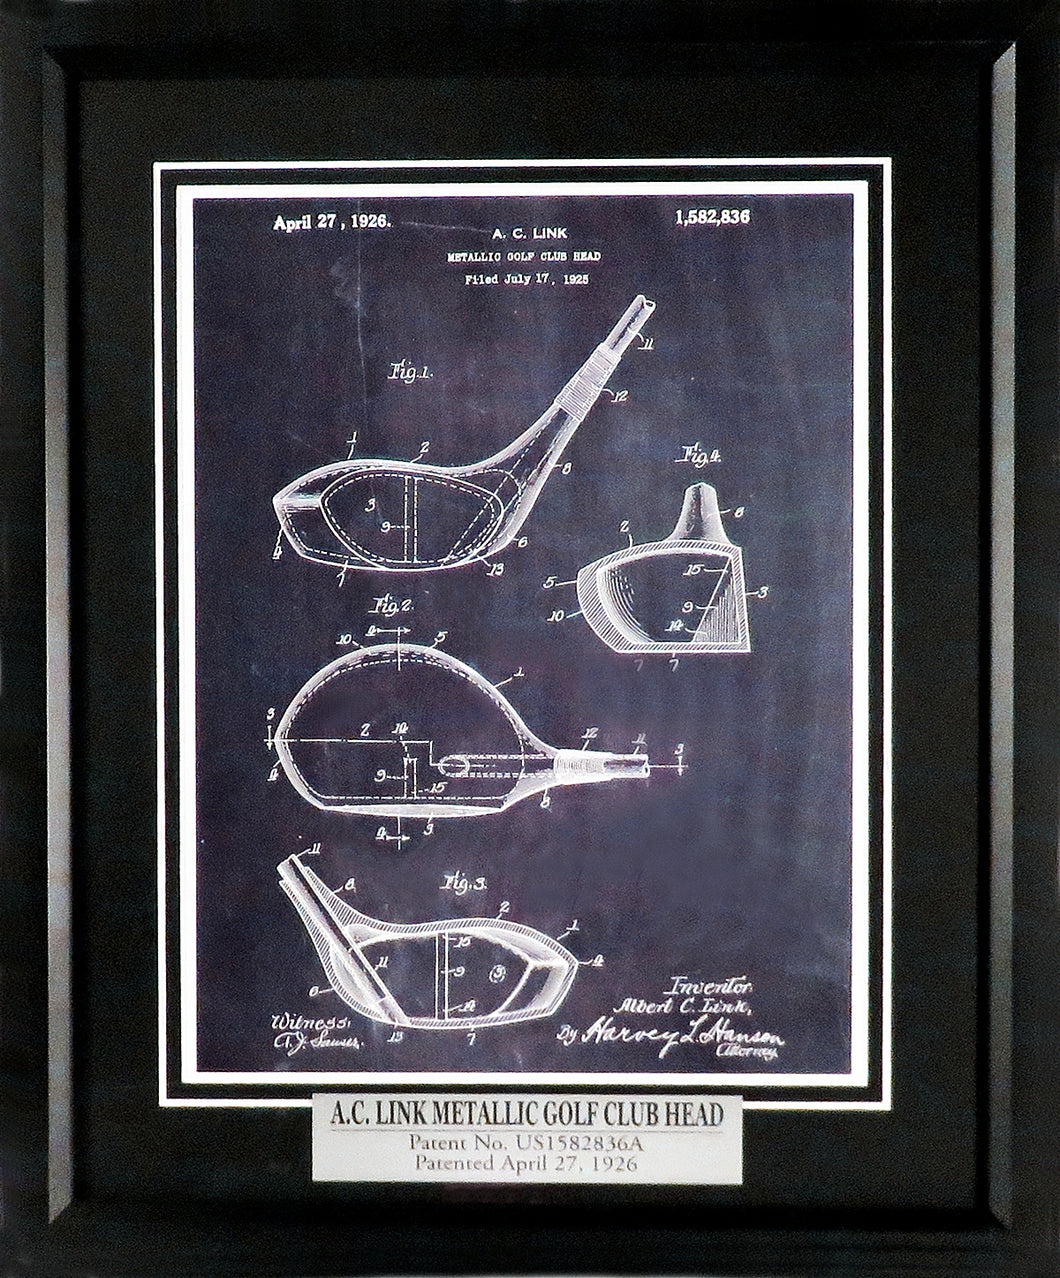 Golf Metallic Club Head Patent Framed Display (w/ Patent Number & Date Plate)